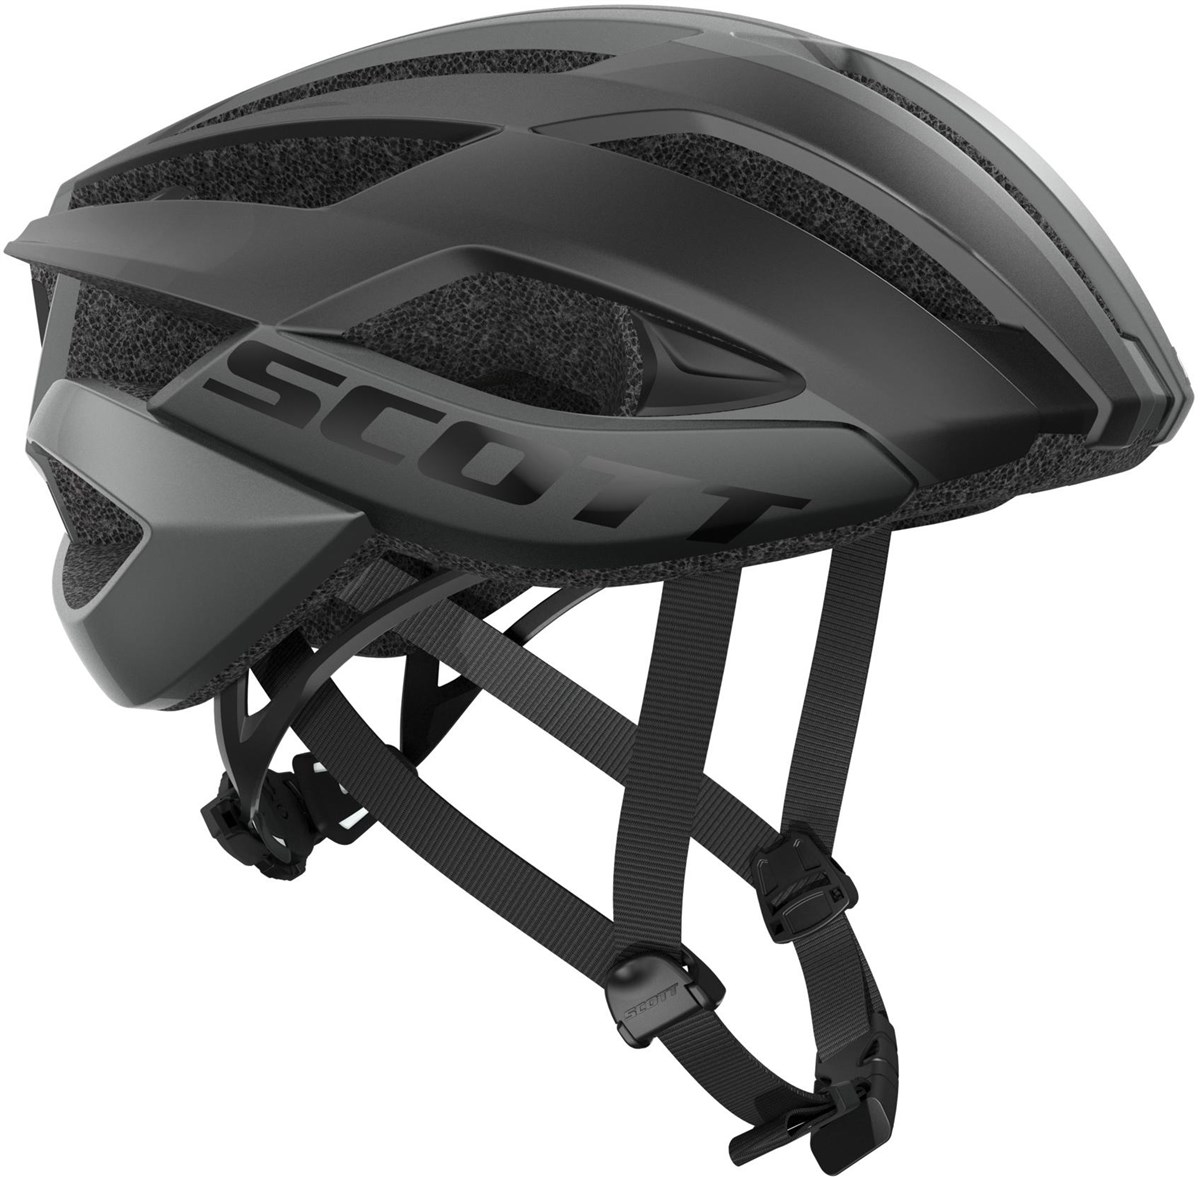 Scott ARX Plus Road Cycling Helmet product image